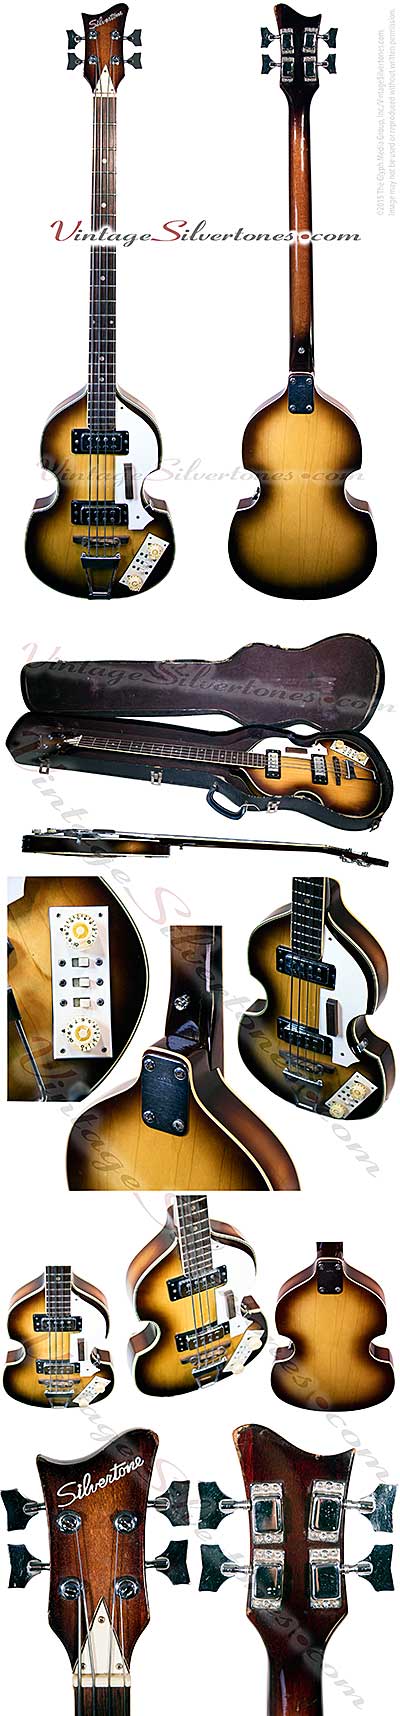 Silvertone bass - Beatles violin shaped, 2 pickups, sunburst finish, made in Japan circa 1966